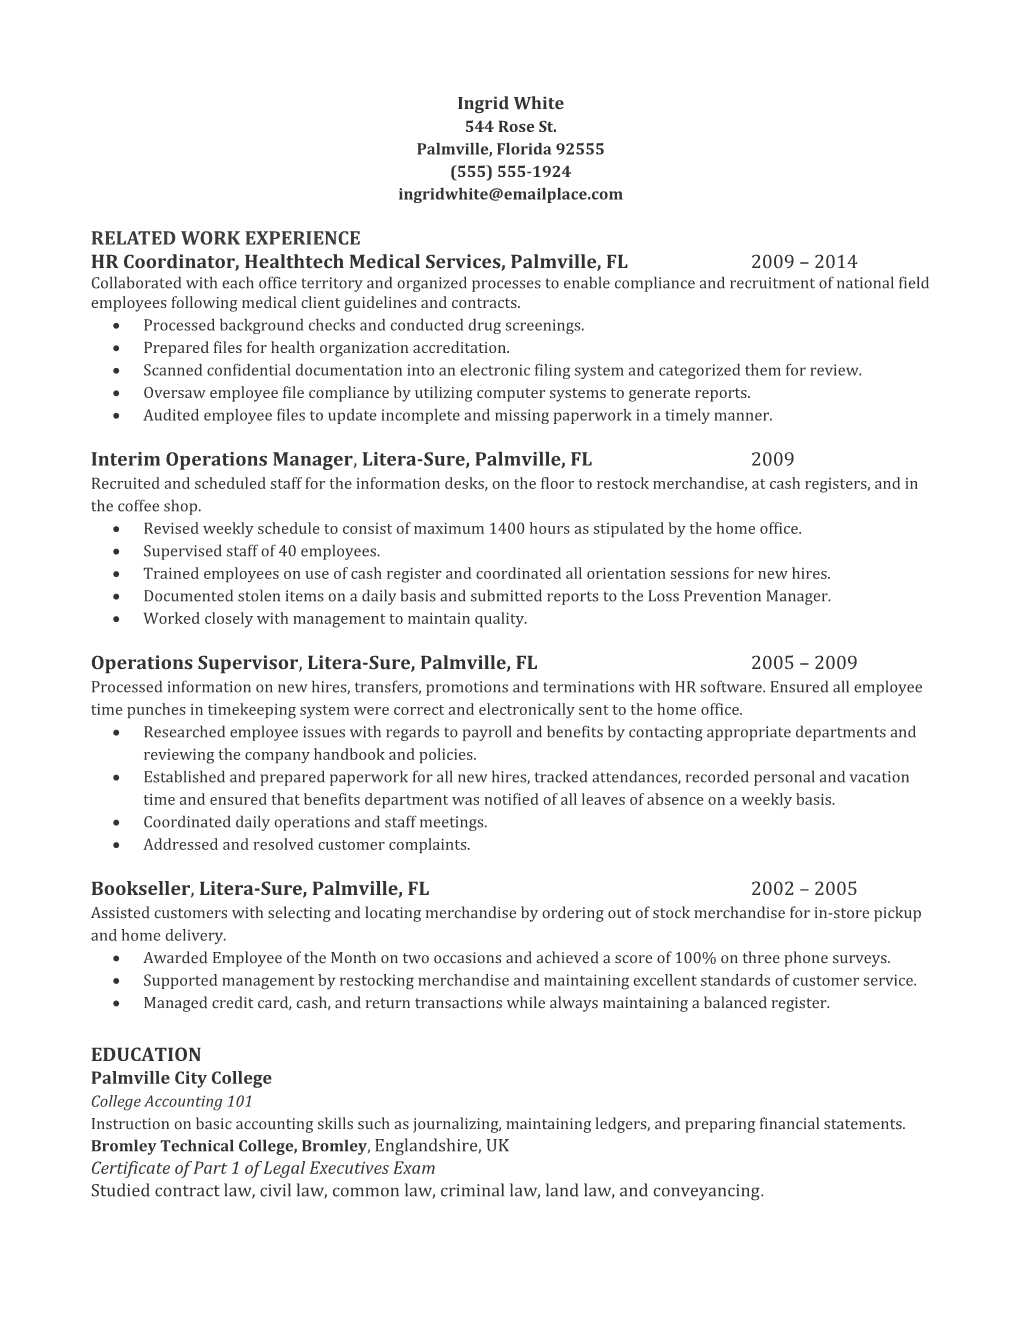 Example HR Coordinator Resume